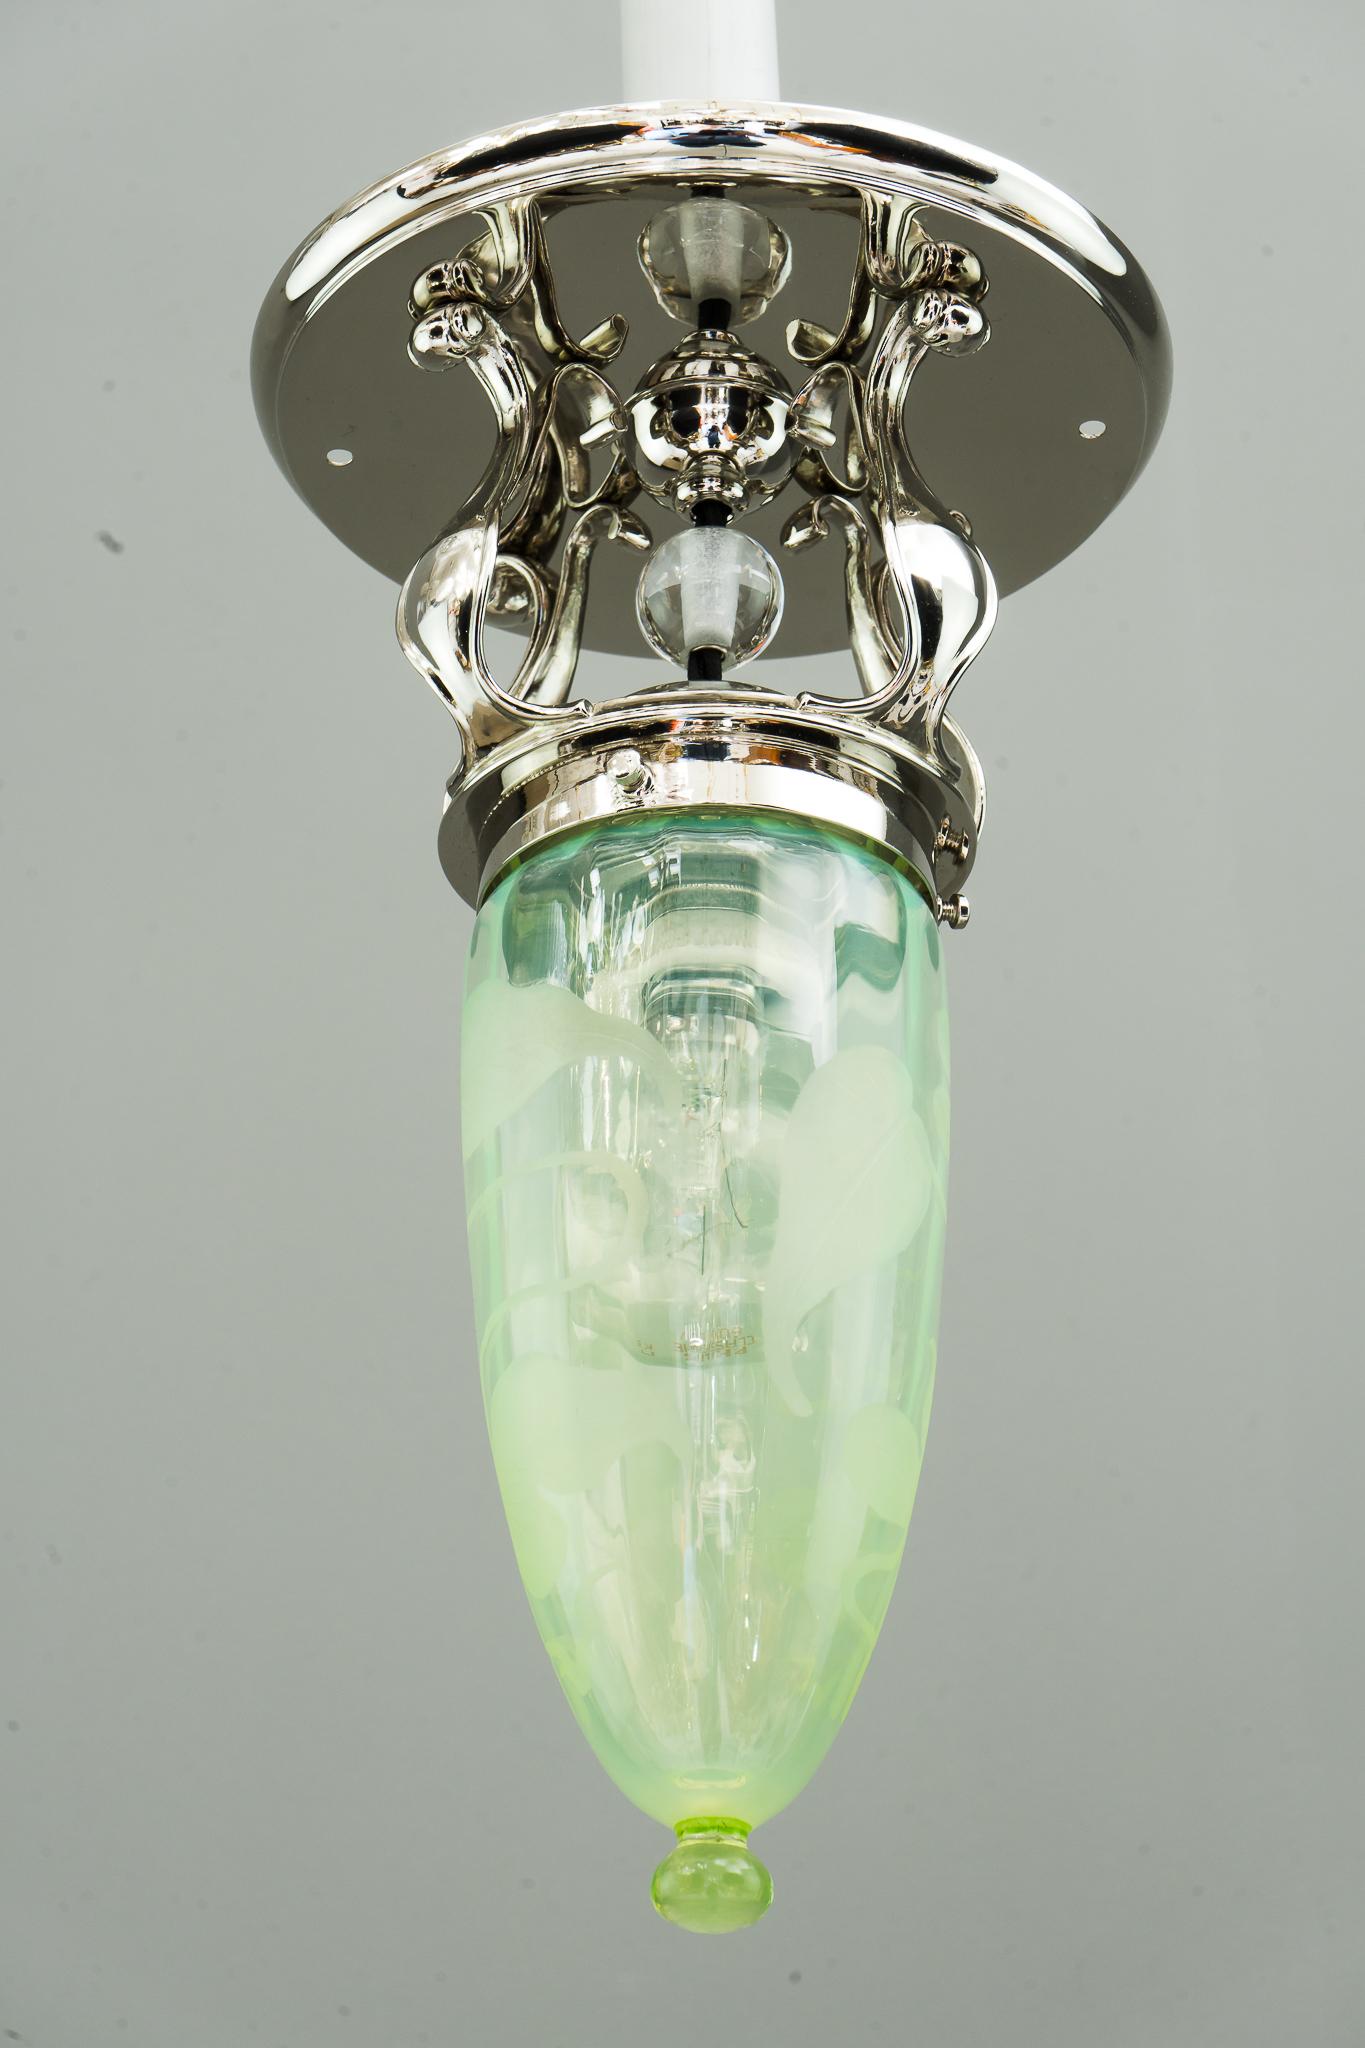 Austrian Art Deco Ceiling Lamp with Original Old Opaline Glass Shade, circa 1920s